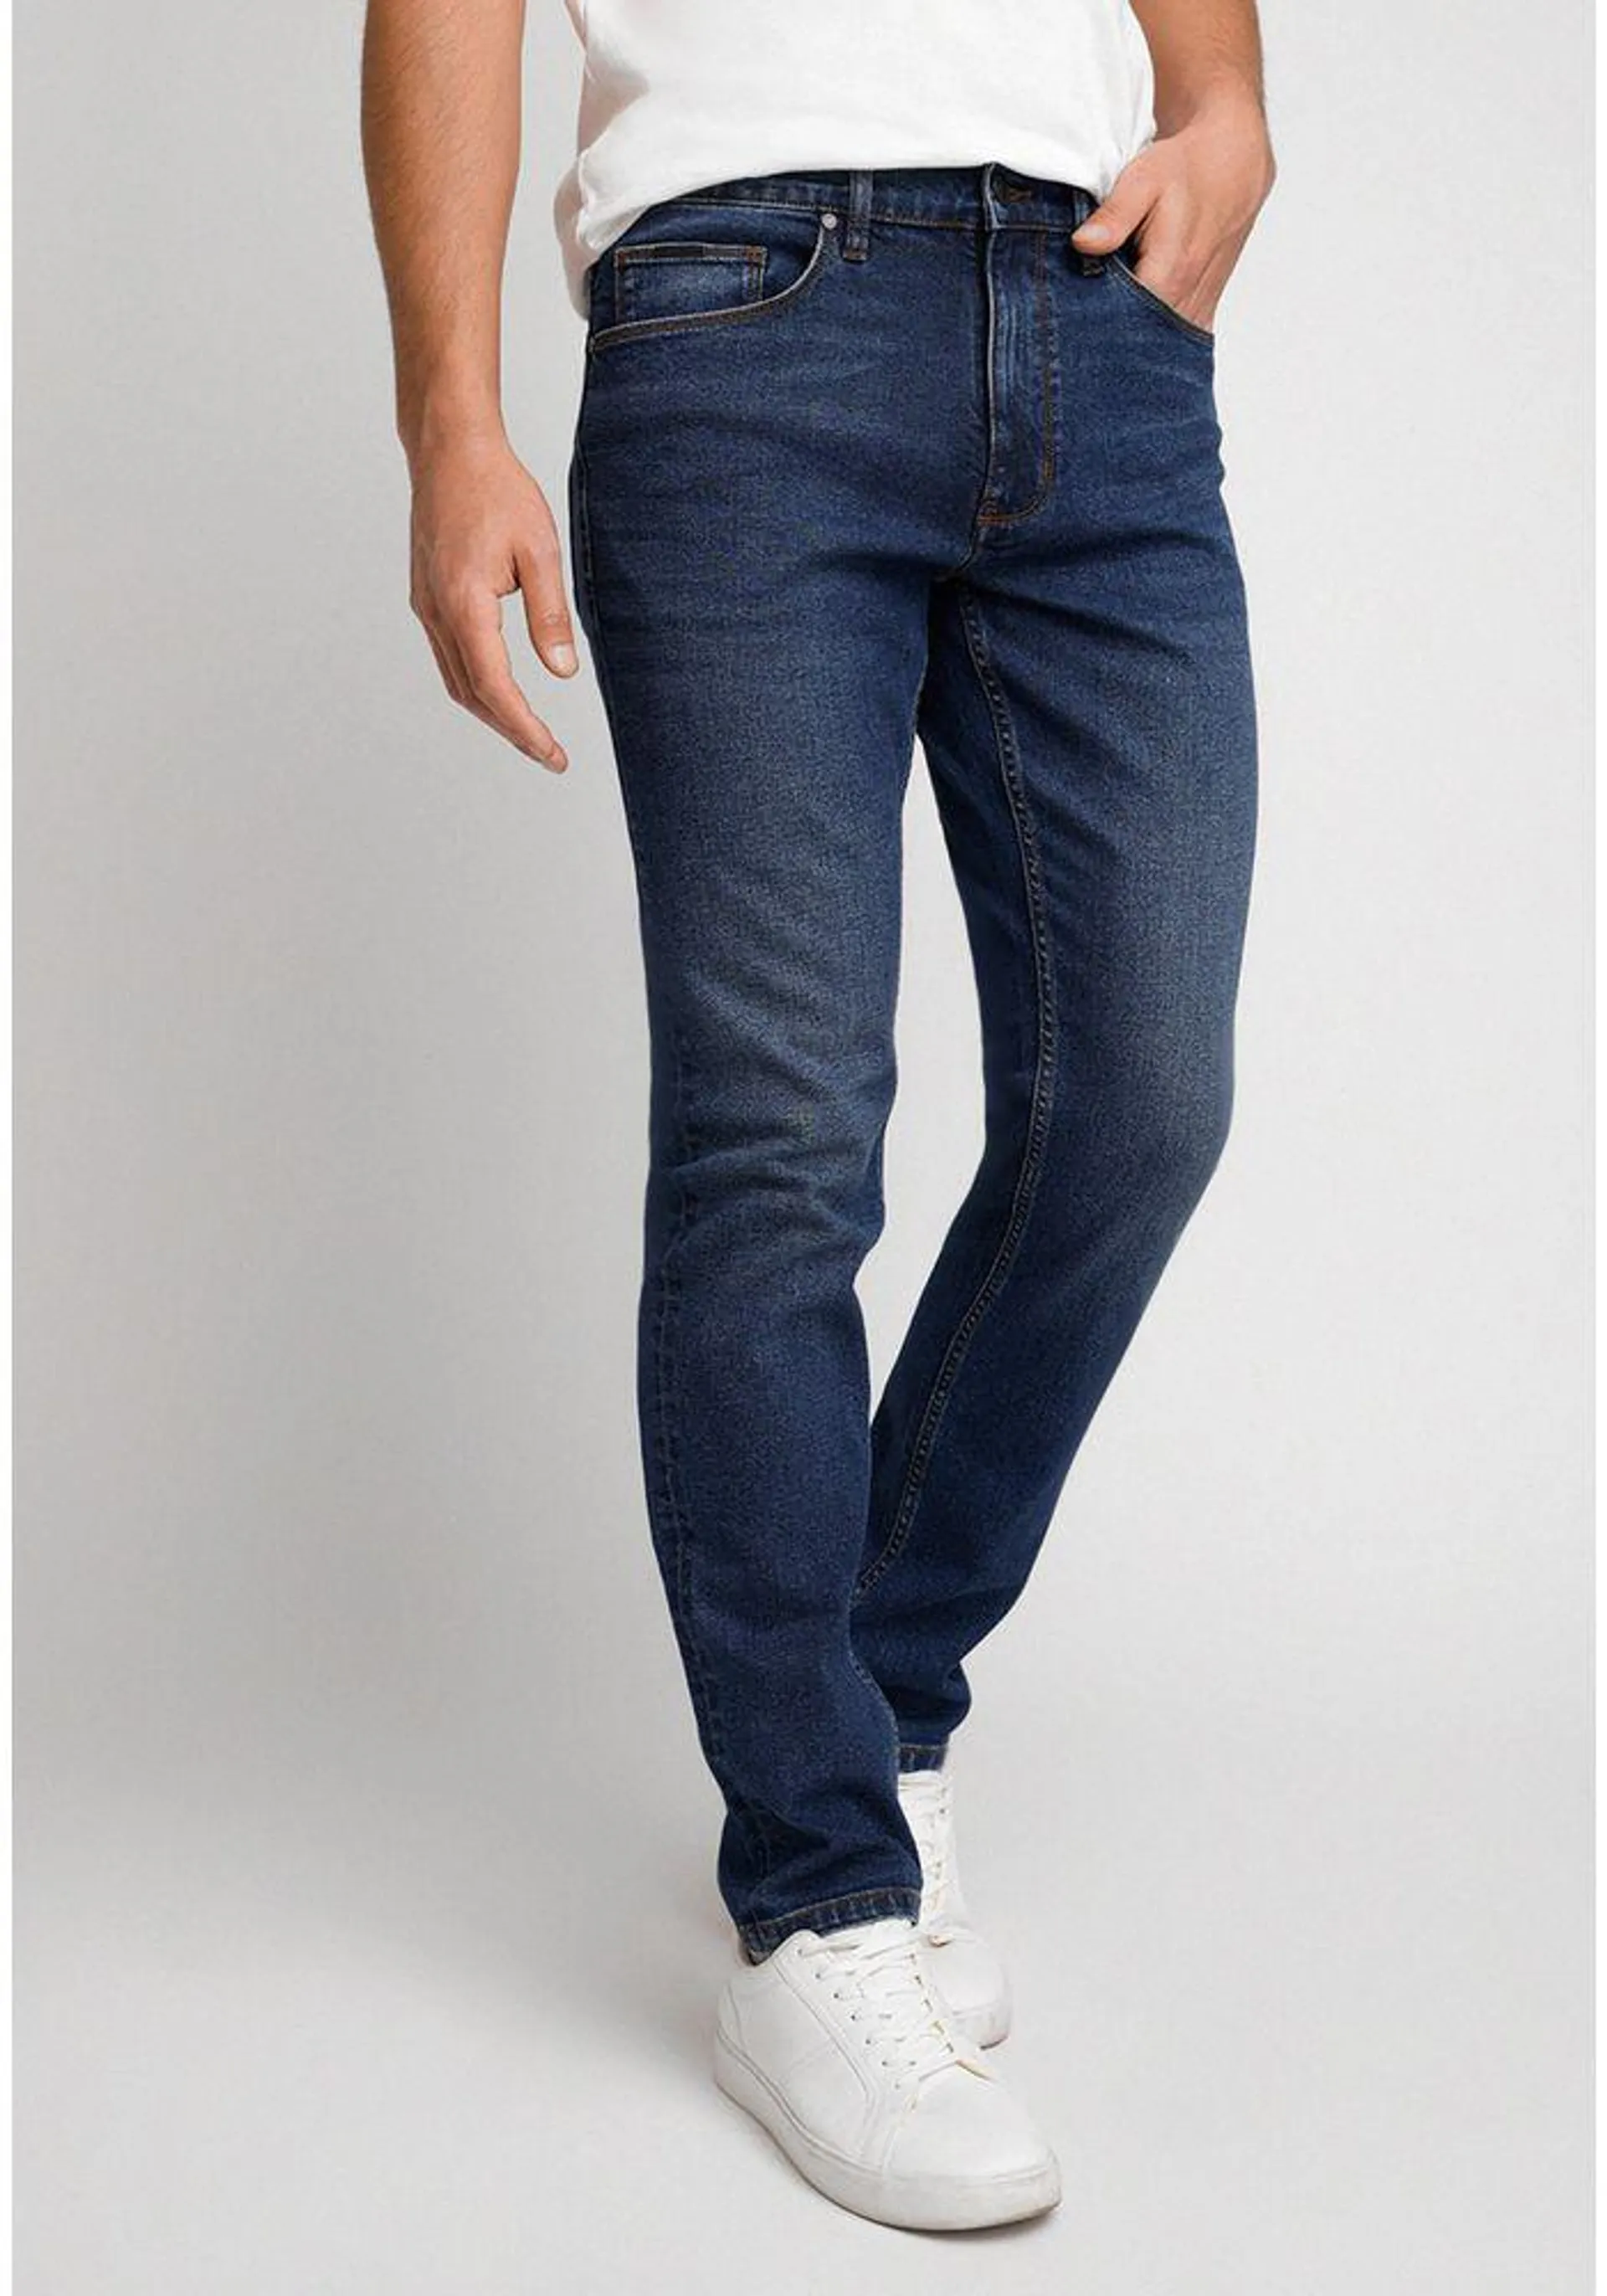 Jeans Hombre Slim Fit Azul Medio